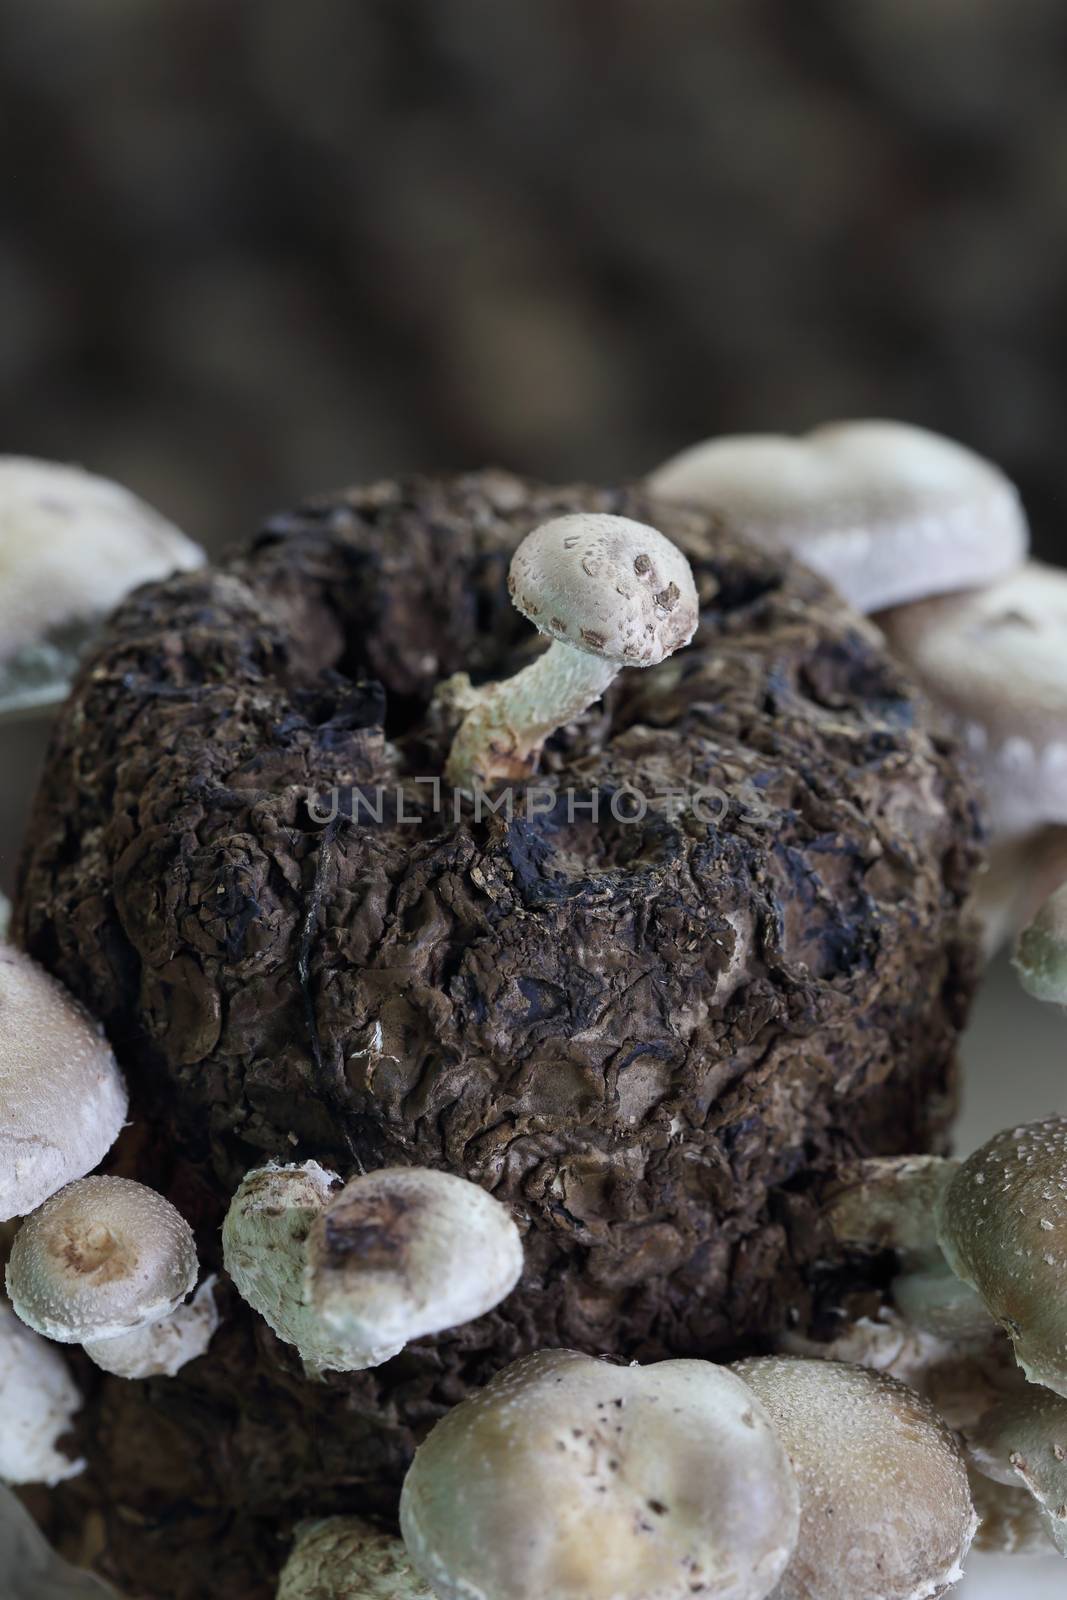 Shiitake mushrooms in mushroom farm